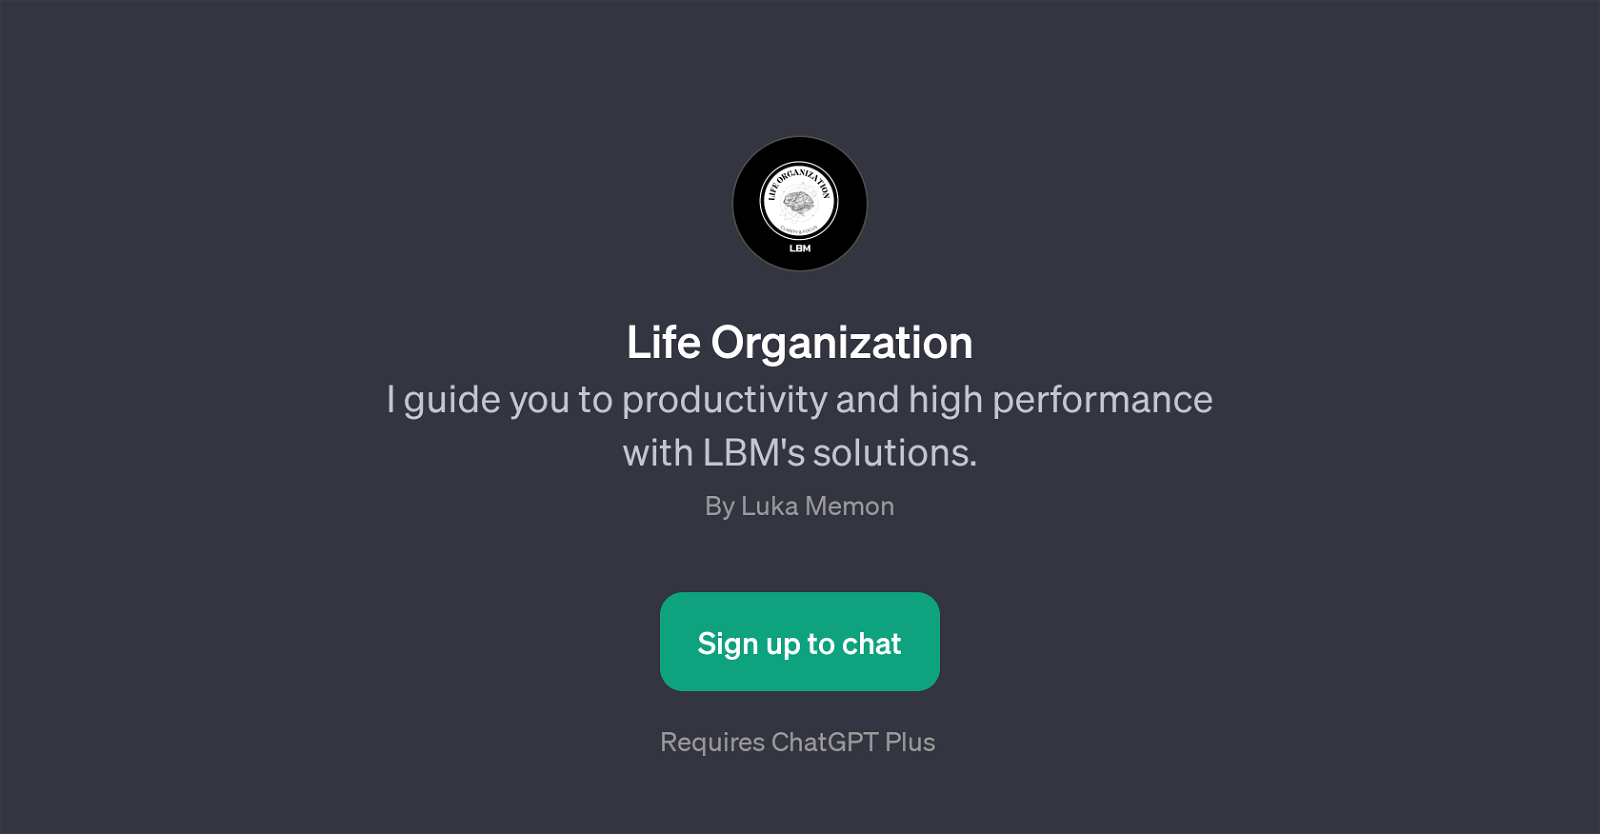 Life Organization website